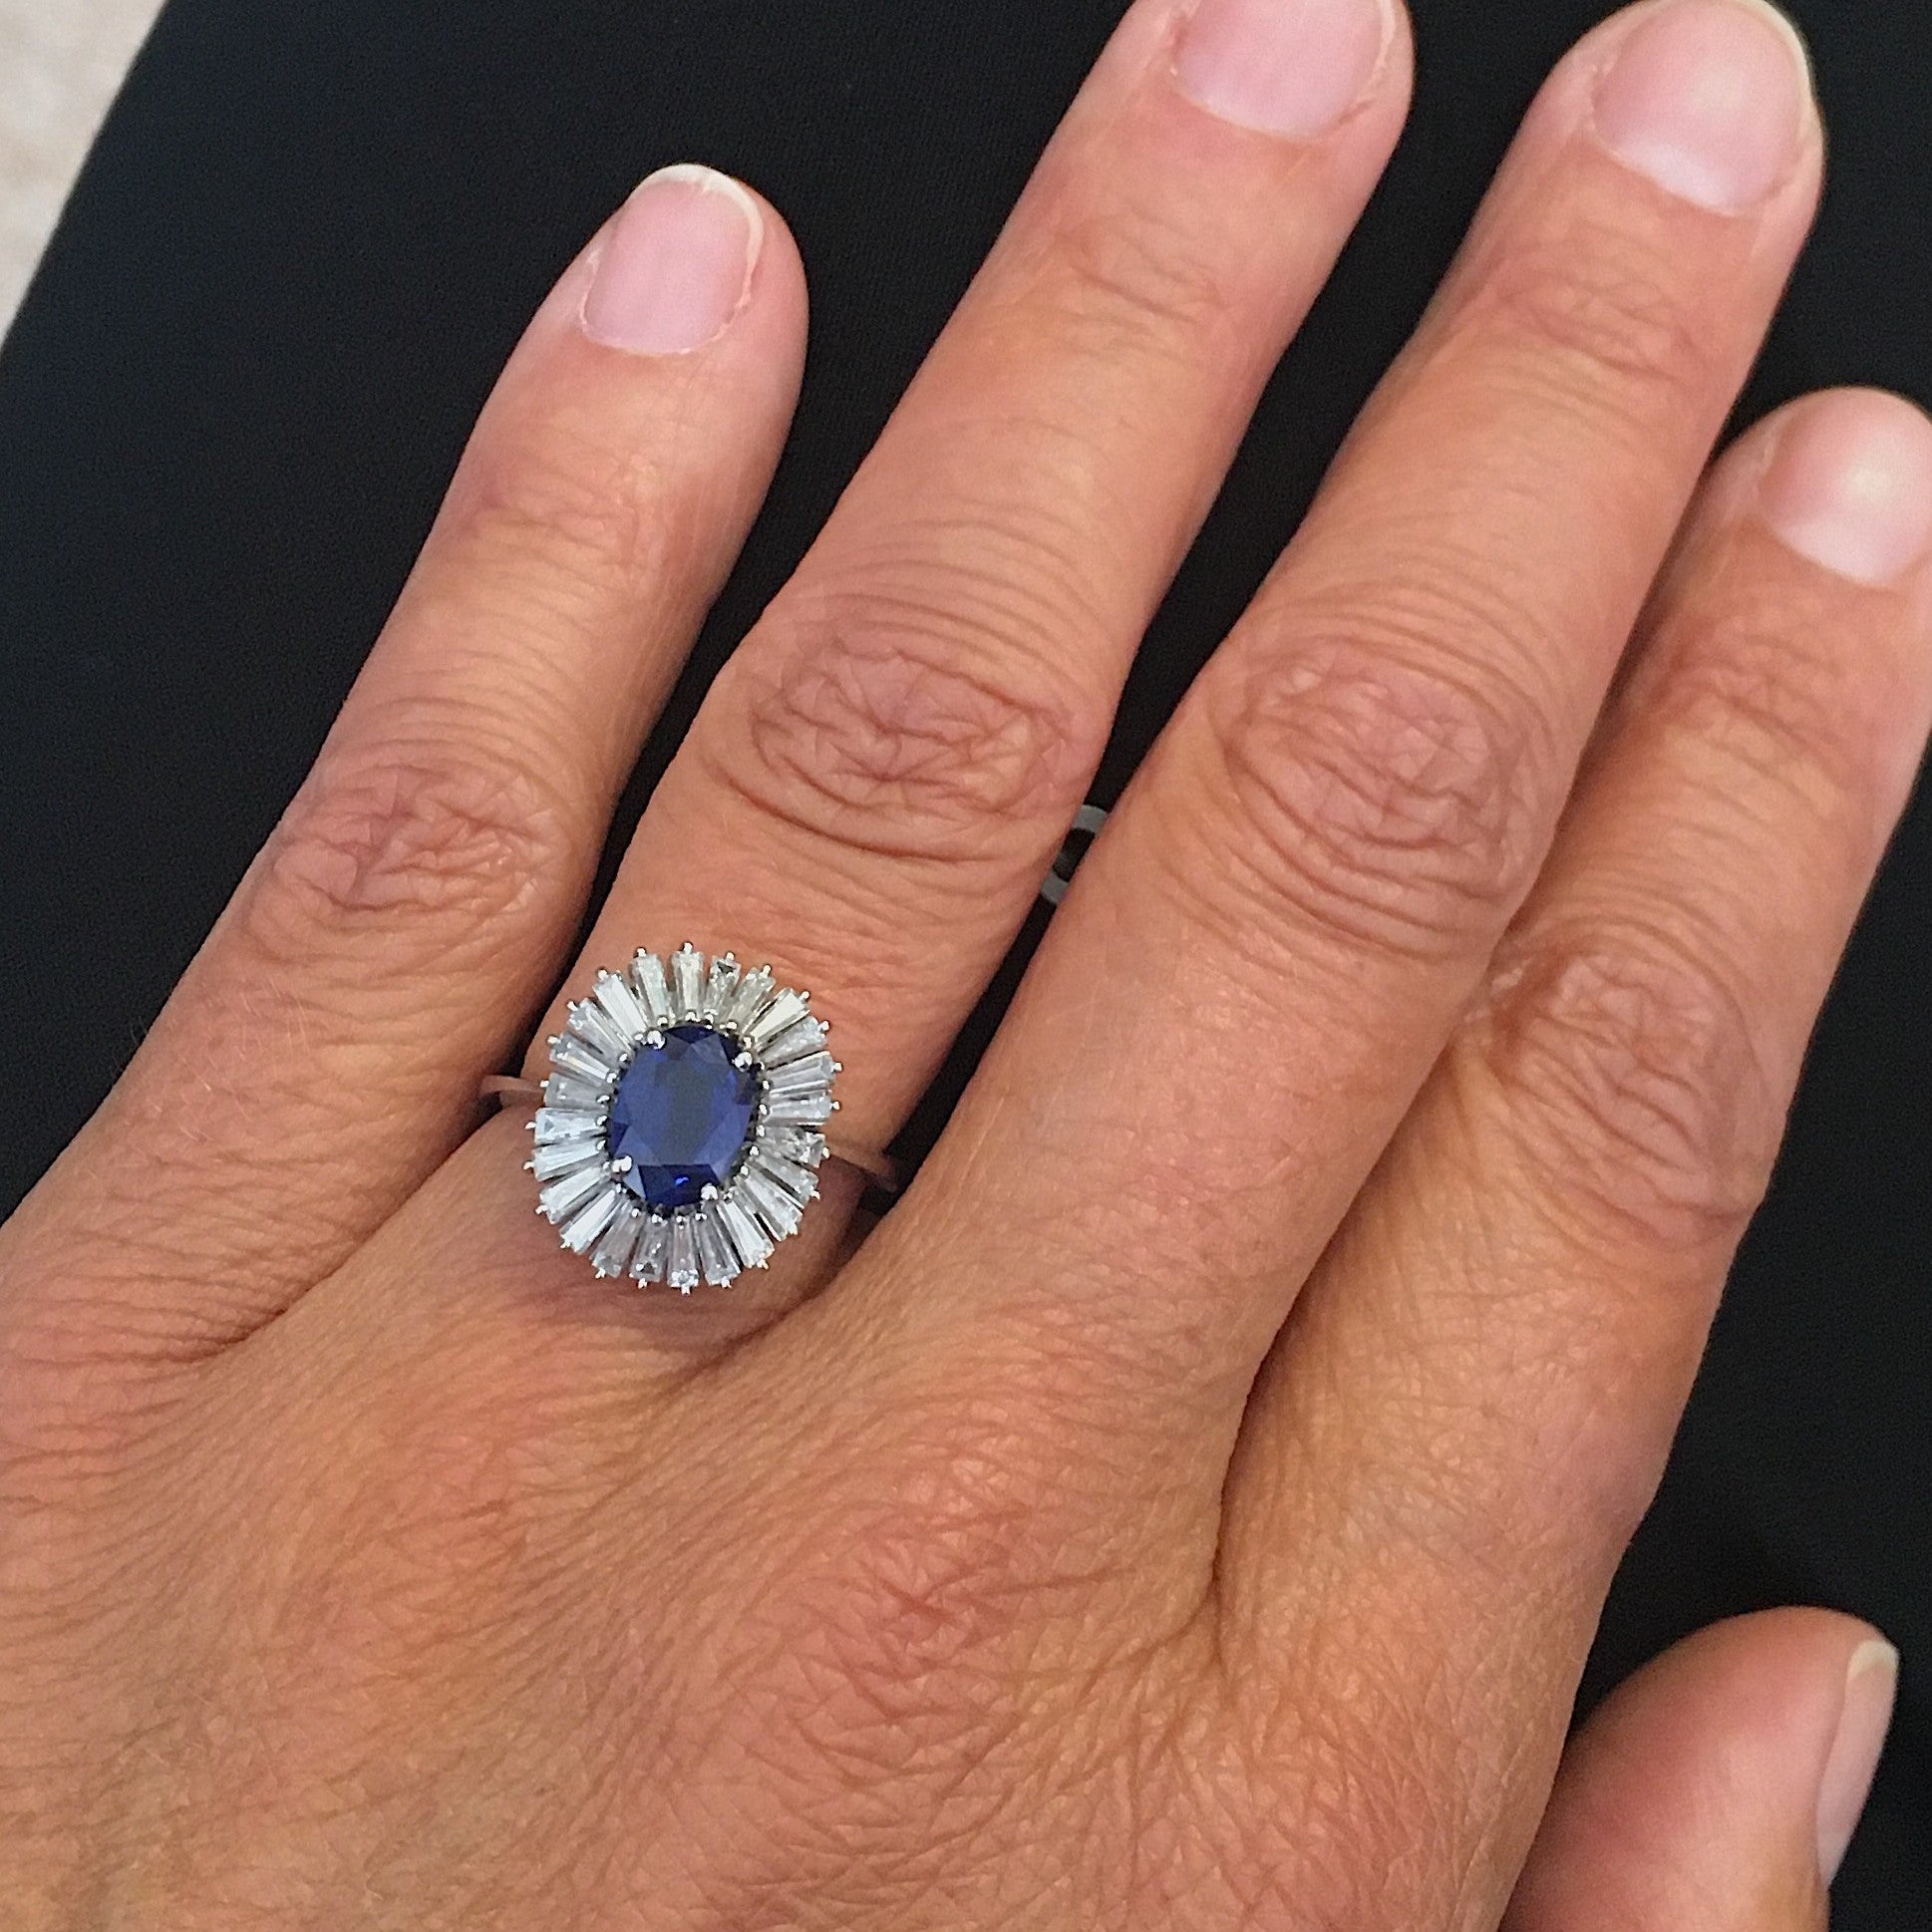 1960s 18KT White Gold Unheated Sapphire & Diamond Ring on finger